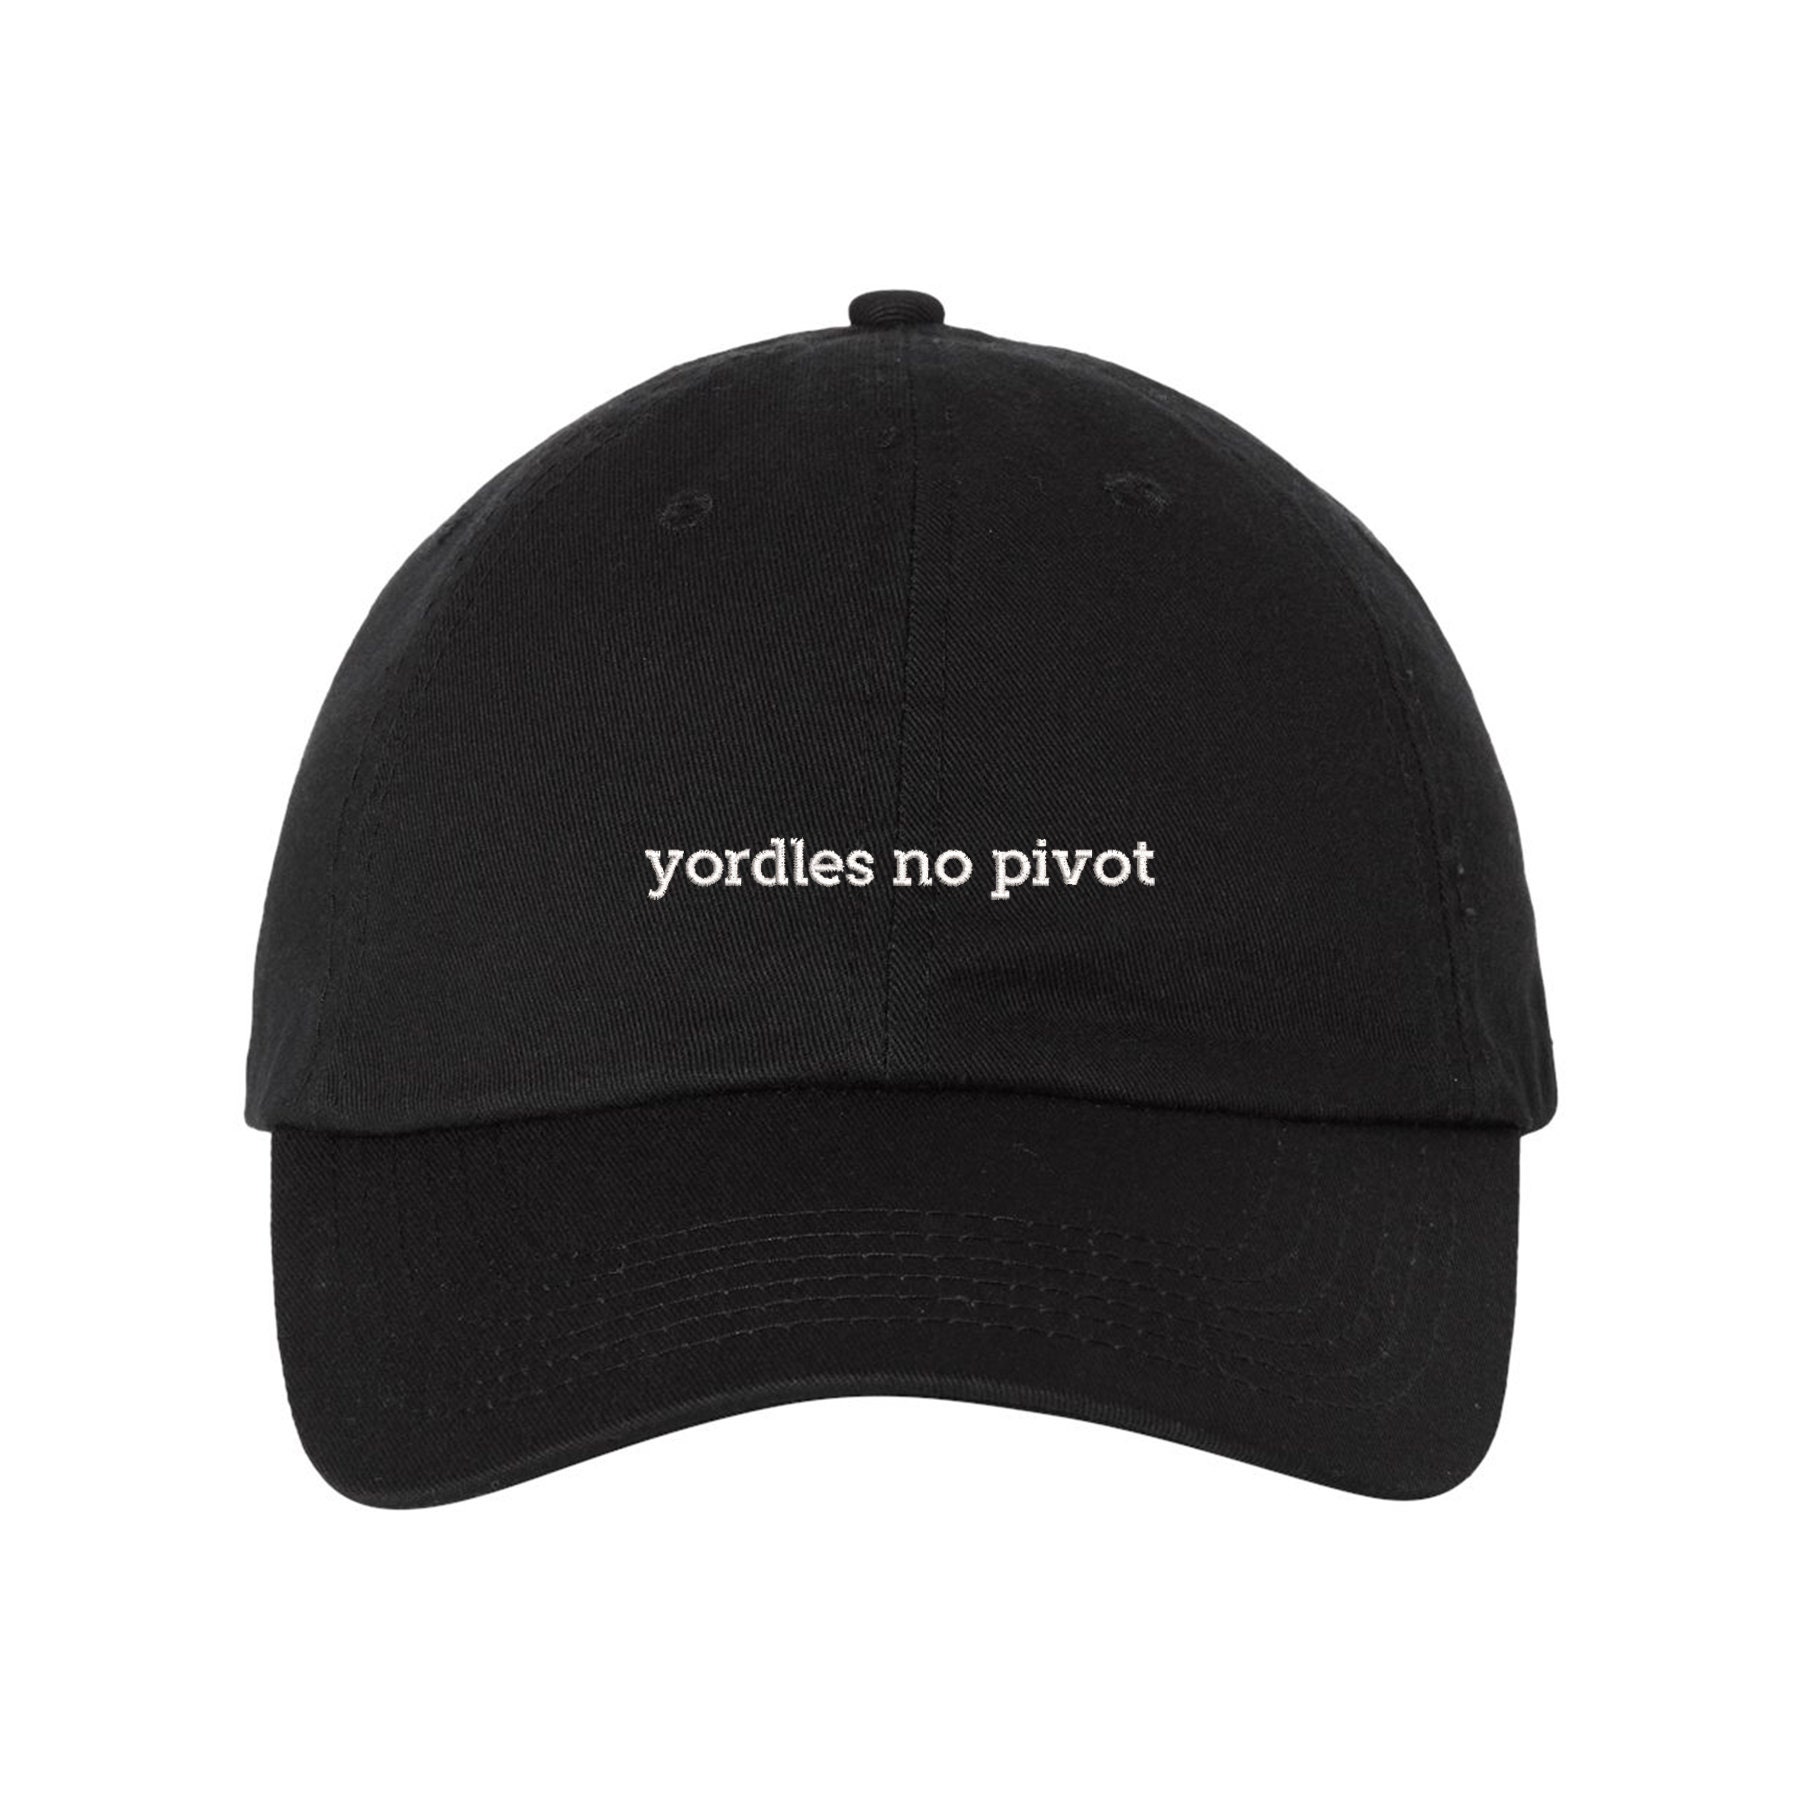 Yordles No Pivot, League Of Legends TFT Hat, Adjustable Dad Hat,  Embroidered Cap -  Österreich